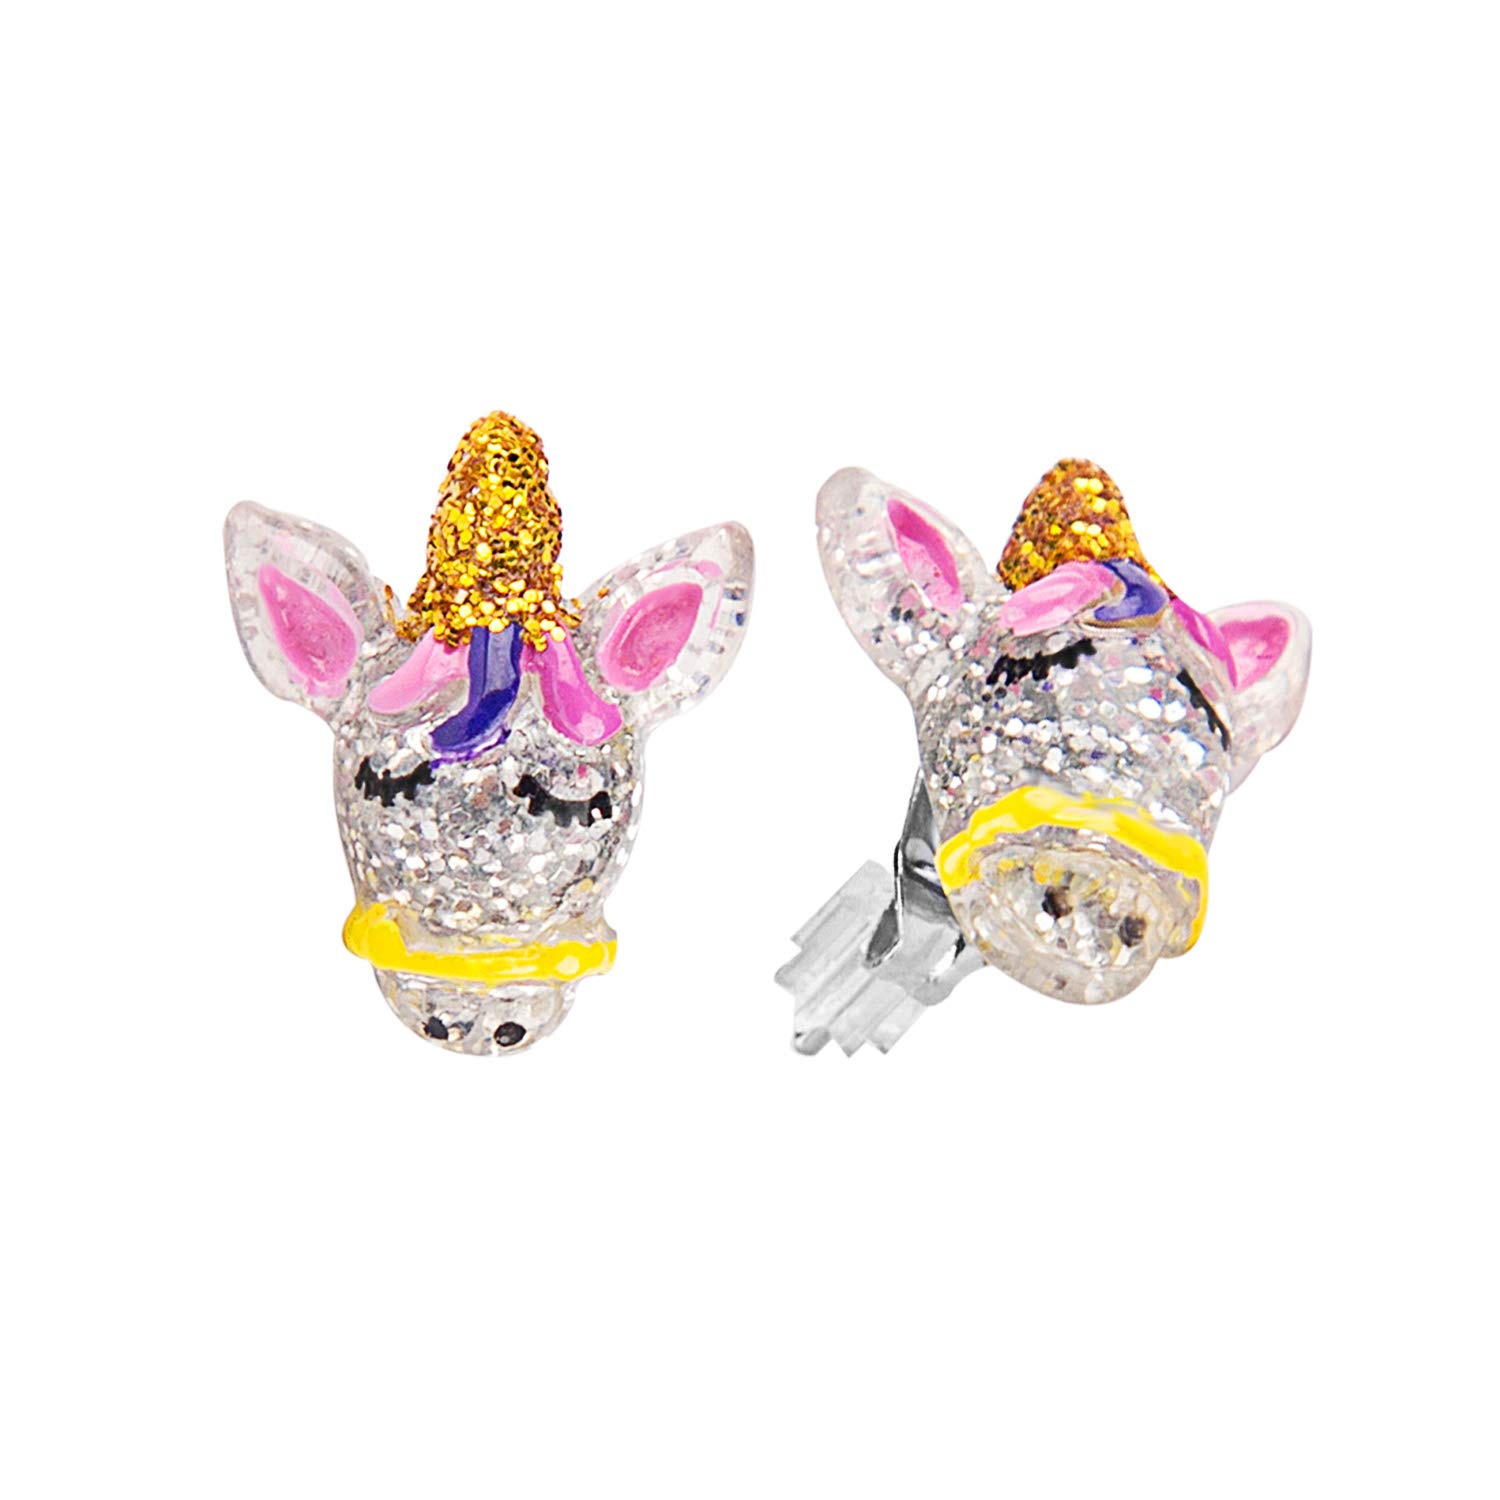 SkyWiseWin Hypoallergenic Earrings Set for Little Girls, Children's Colorful Cute Earrings for Kids